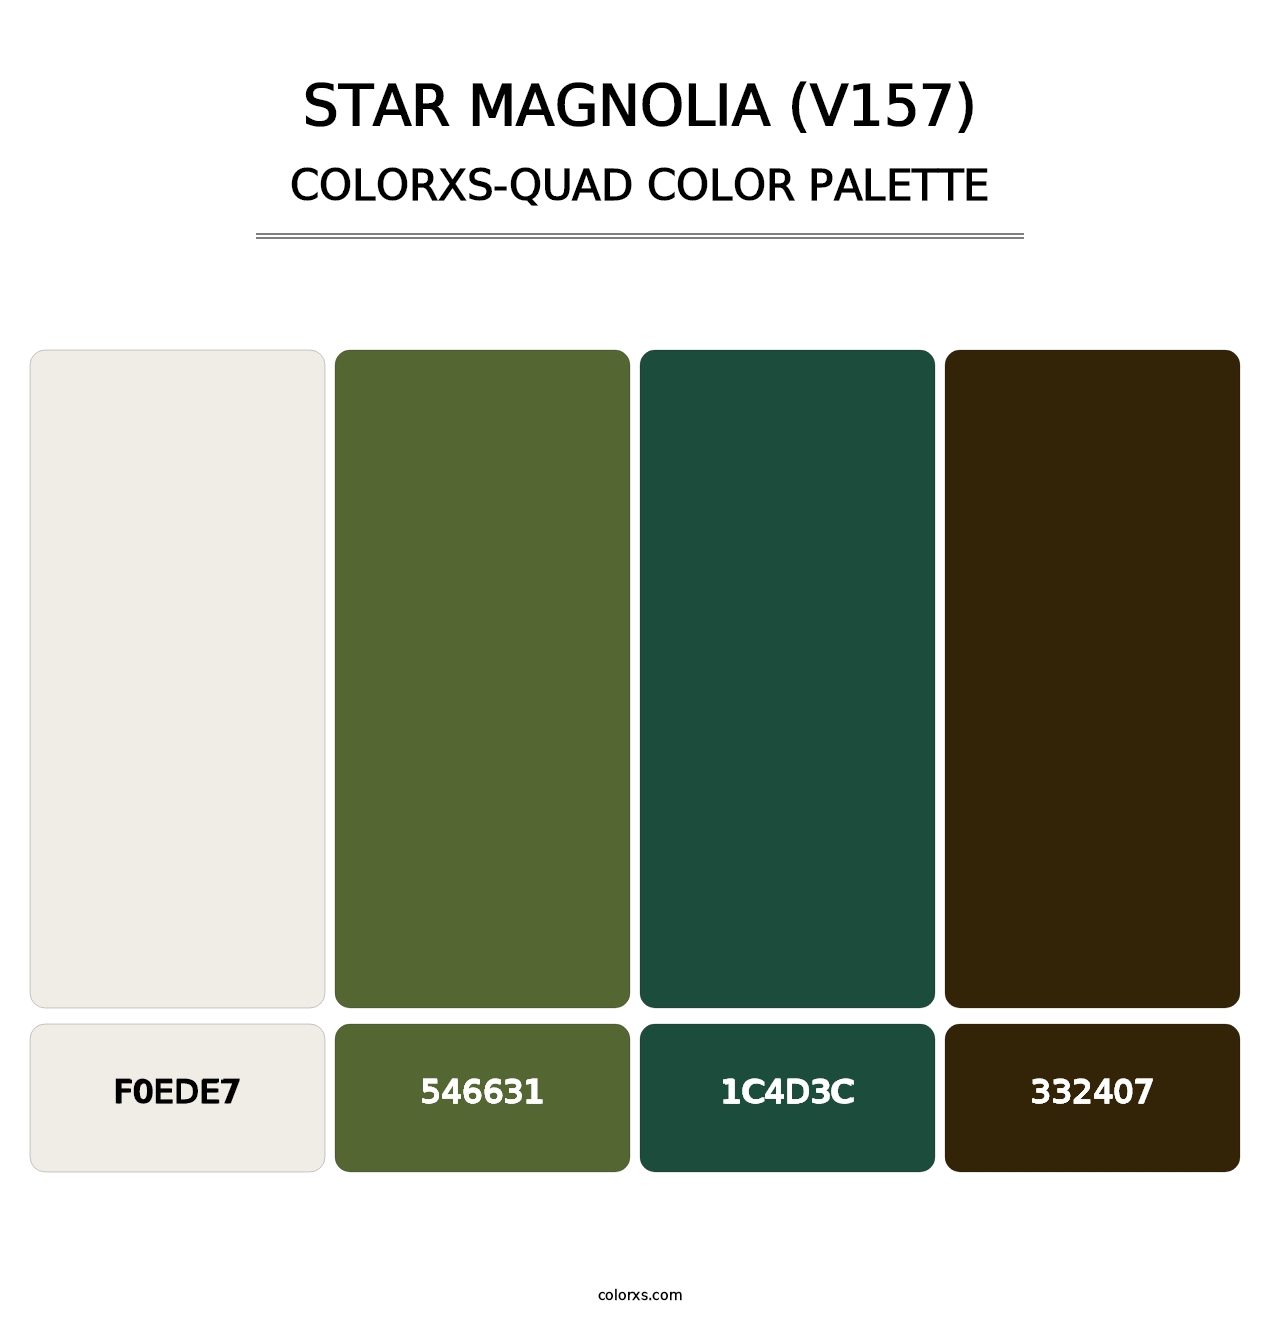 Star Magnolia (V157) - Colorxs Quad Palette